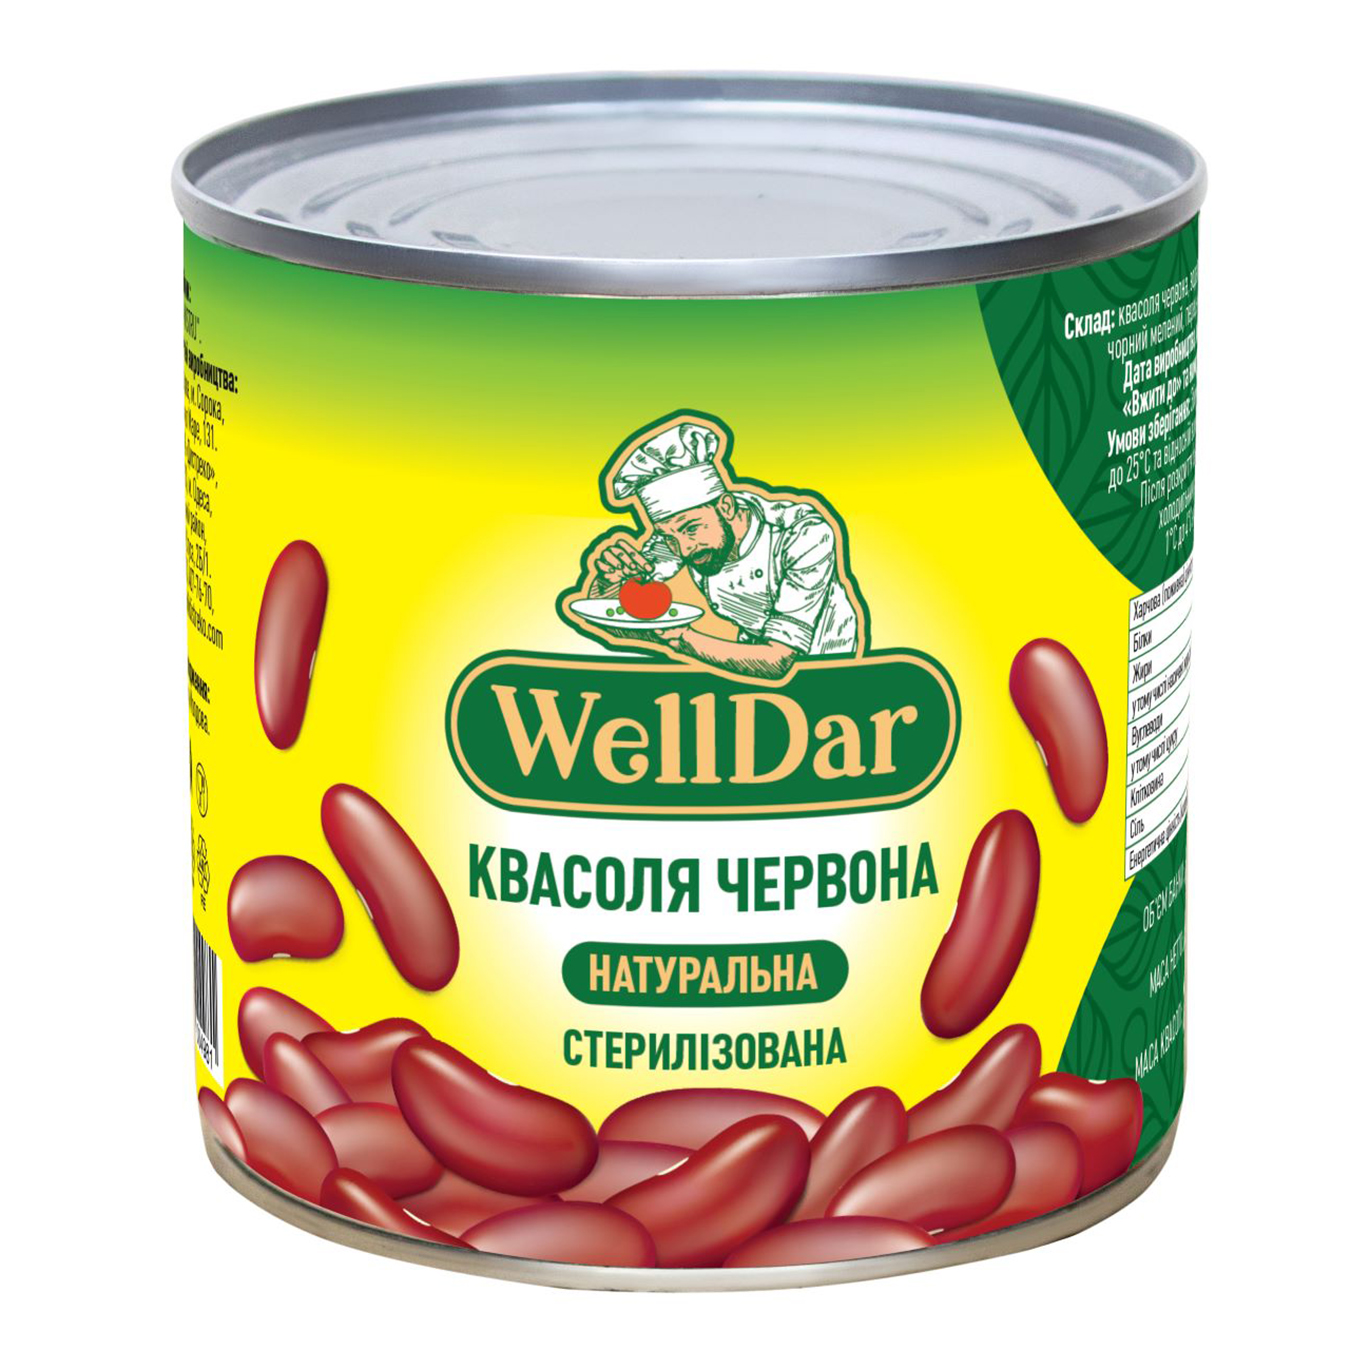 WellDar red natural sterilized beans 410g